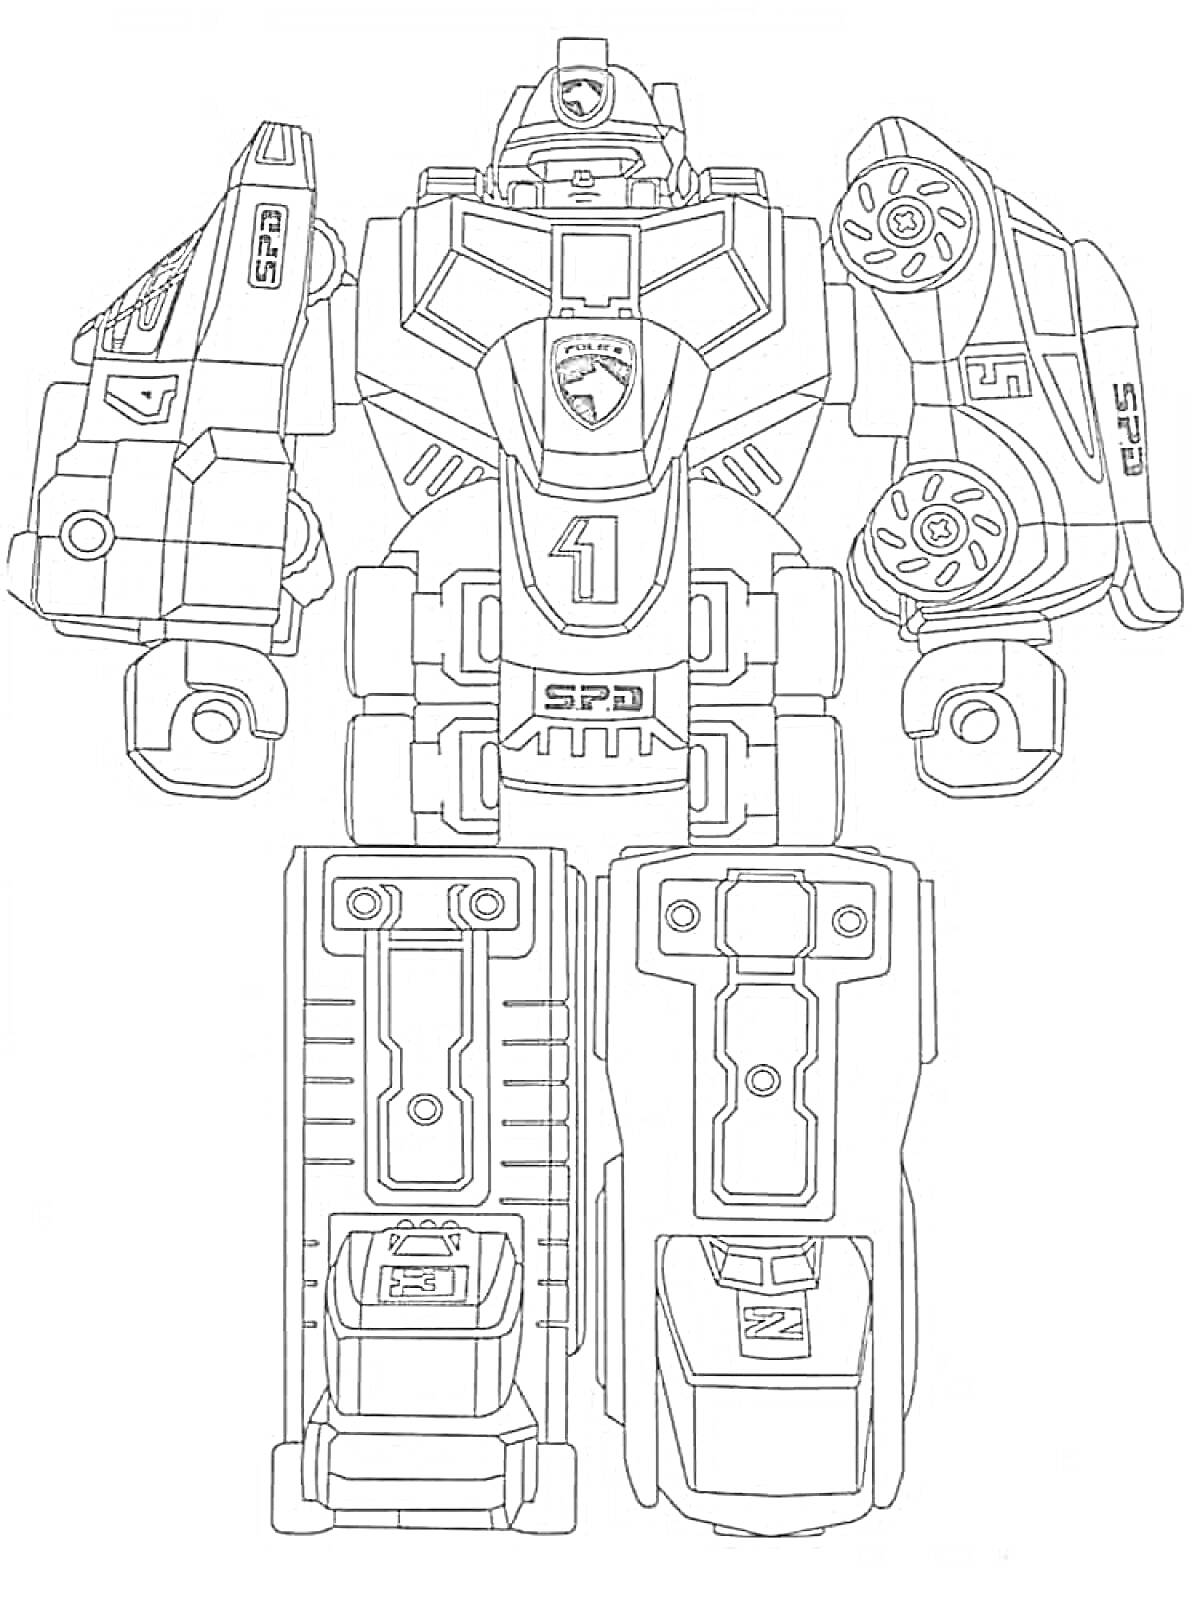 Раскраска Тобот в форме робота с элементами трансформации: колеса, броня, логотип, цифра 